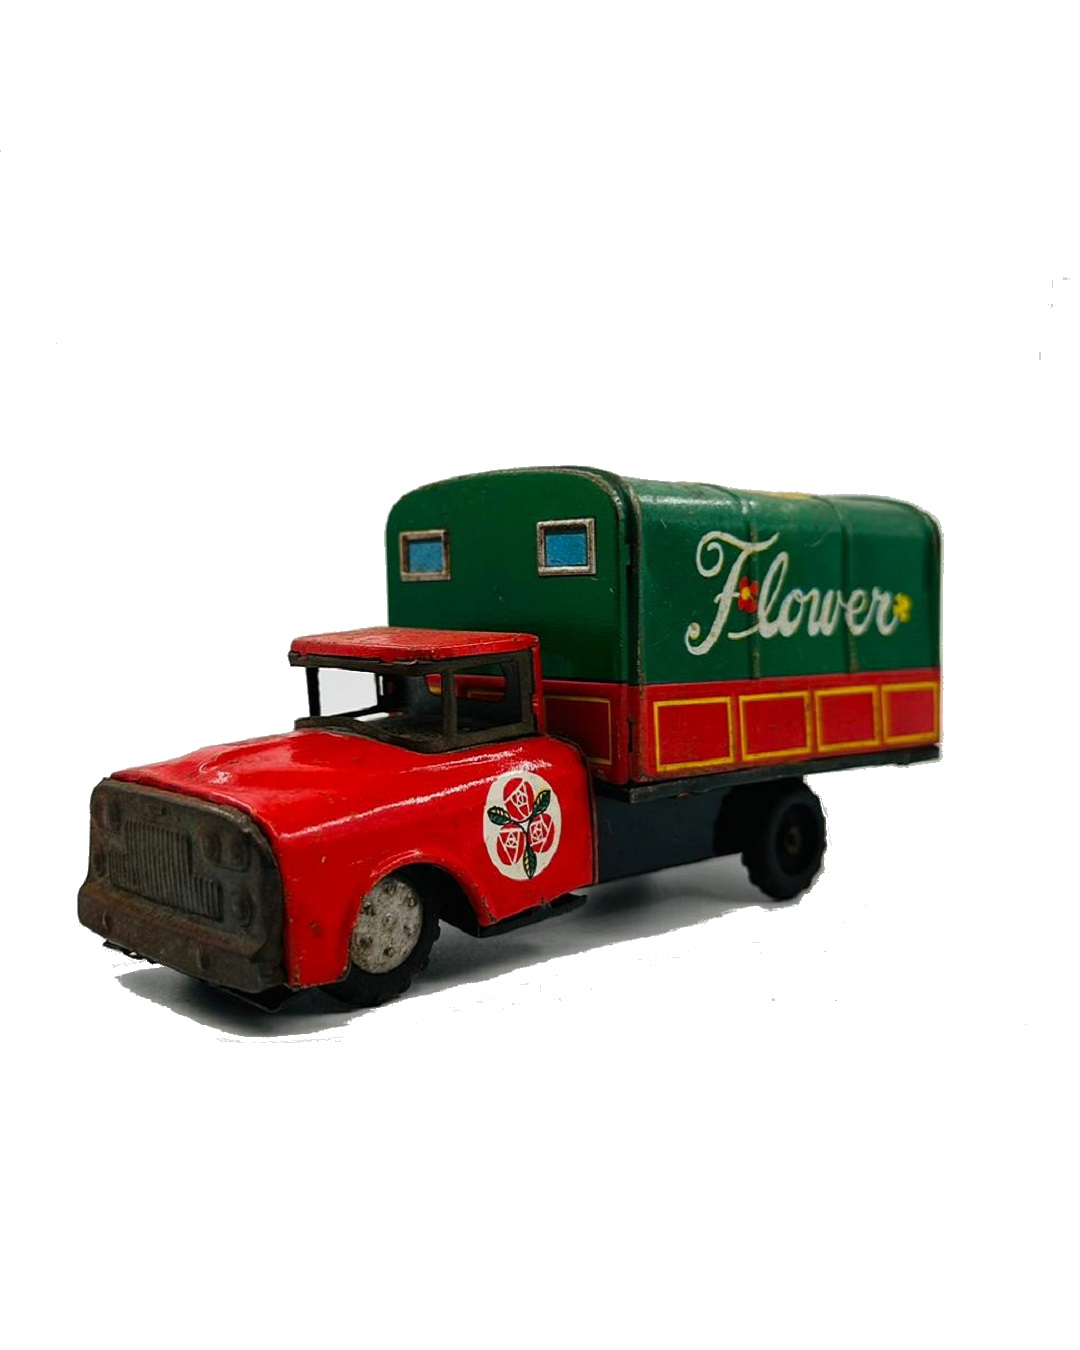 Flower vintage truck